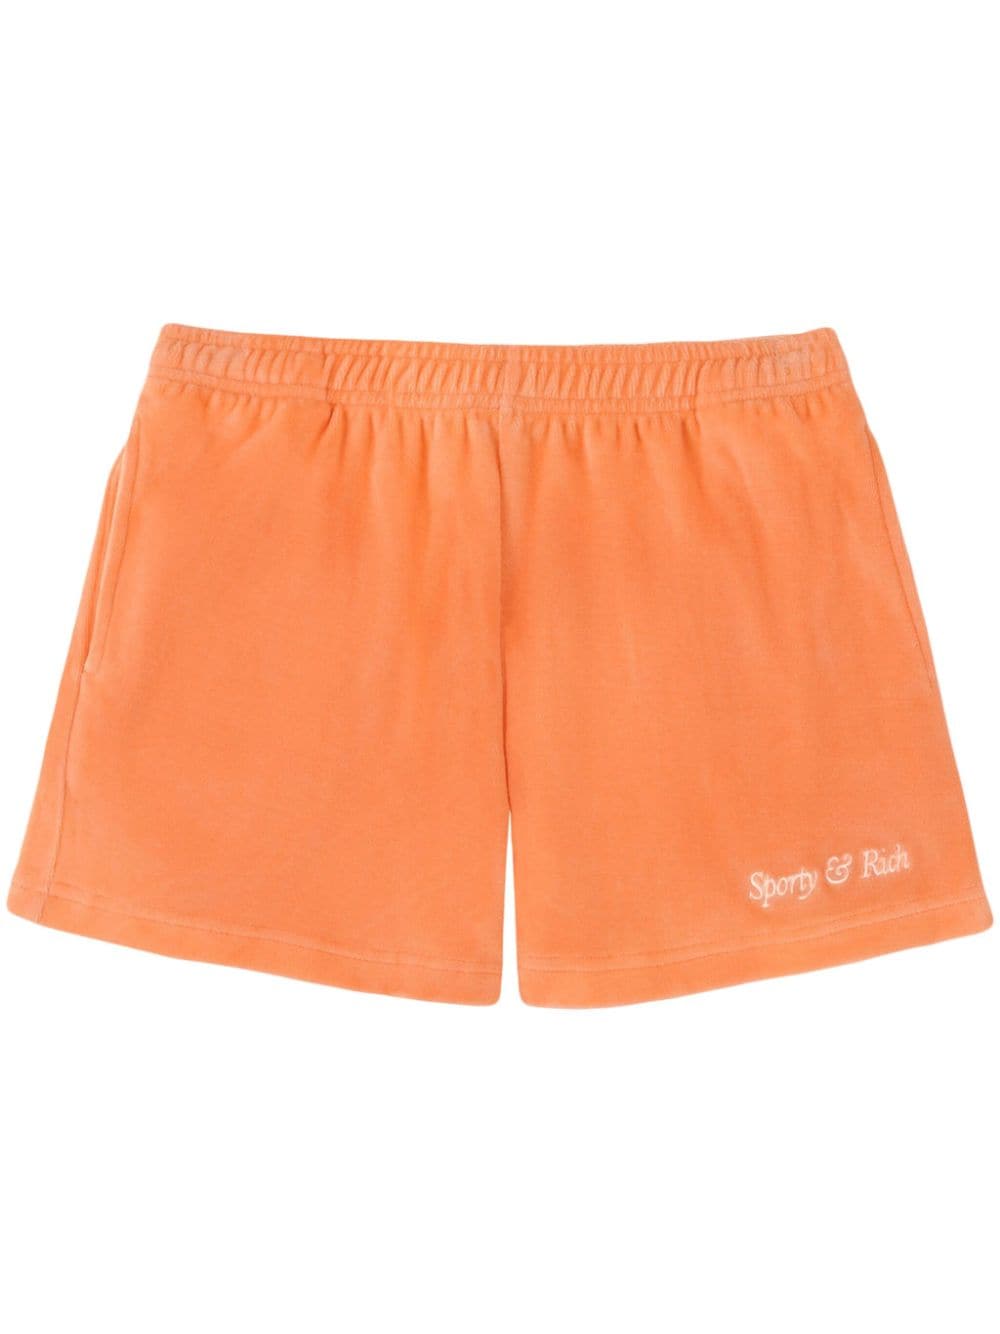 Sporty & Rich Italic Logo cotton track shorts - Orange von Sporty & Rich